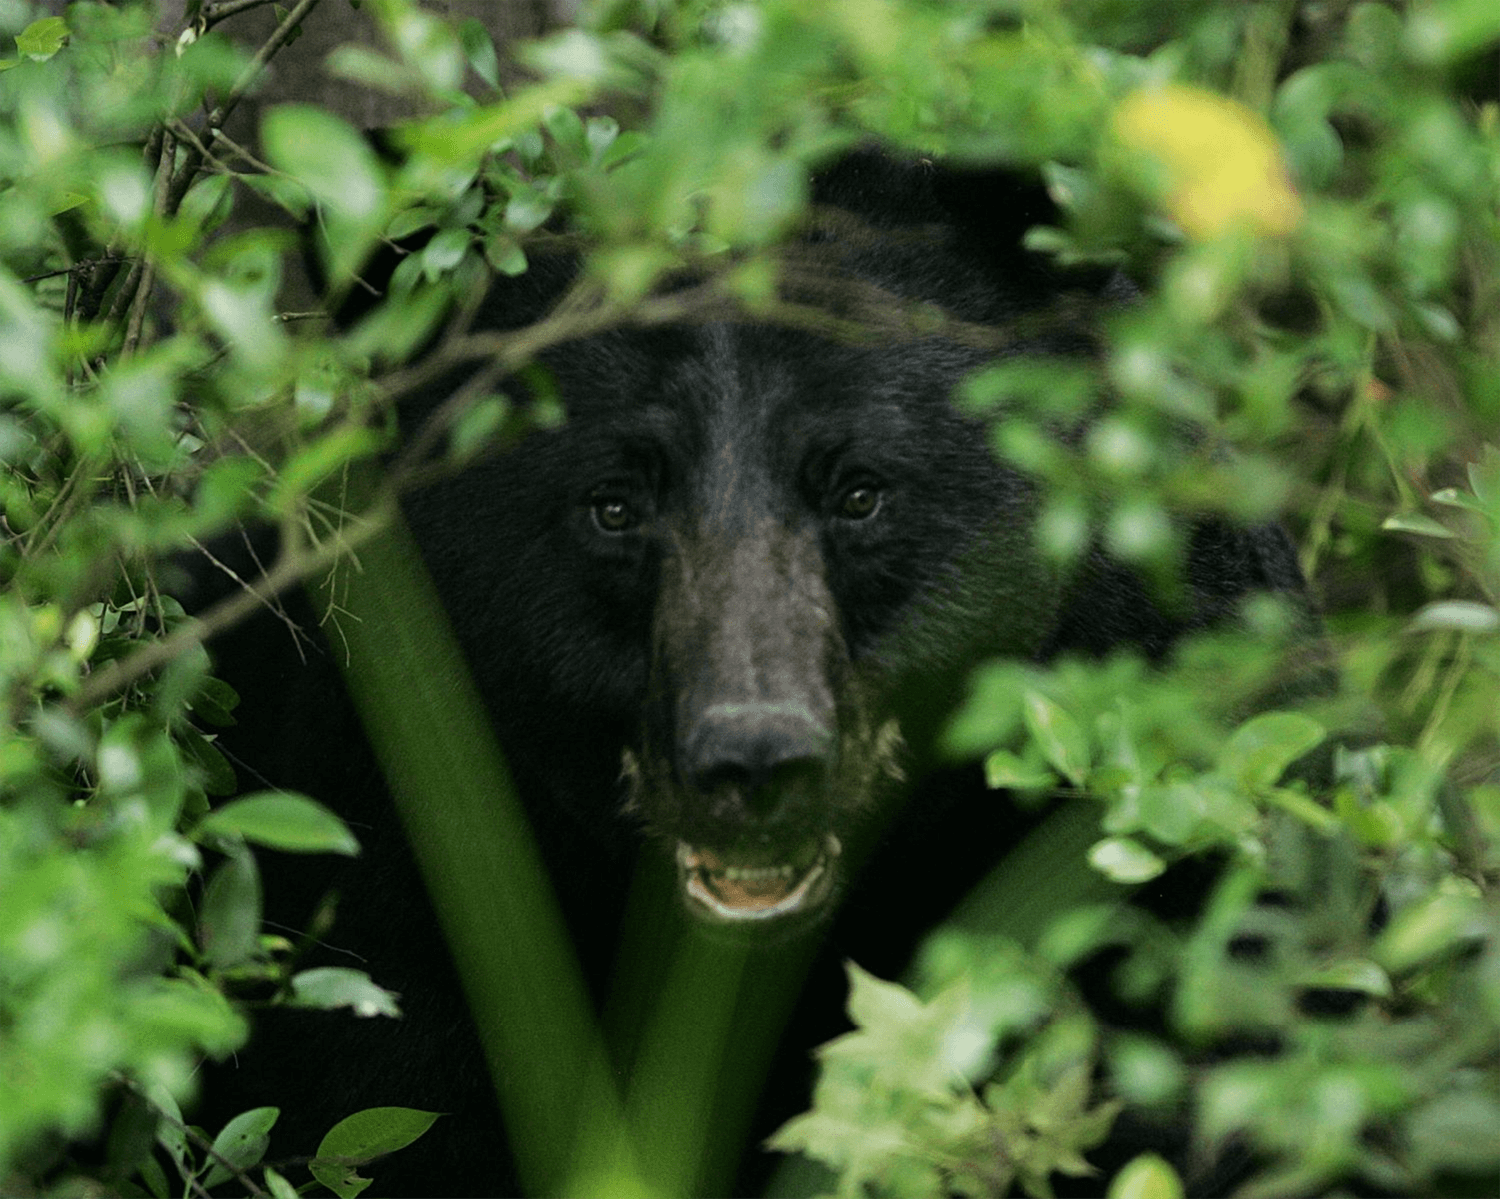 Black bear peering through foliage